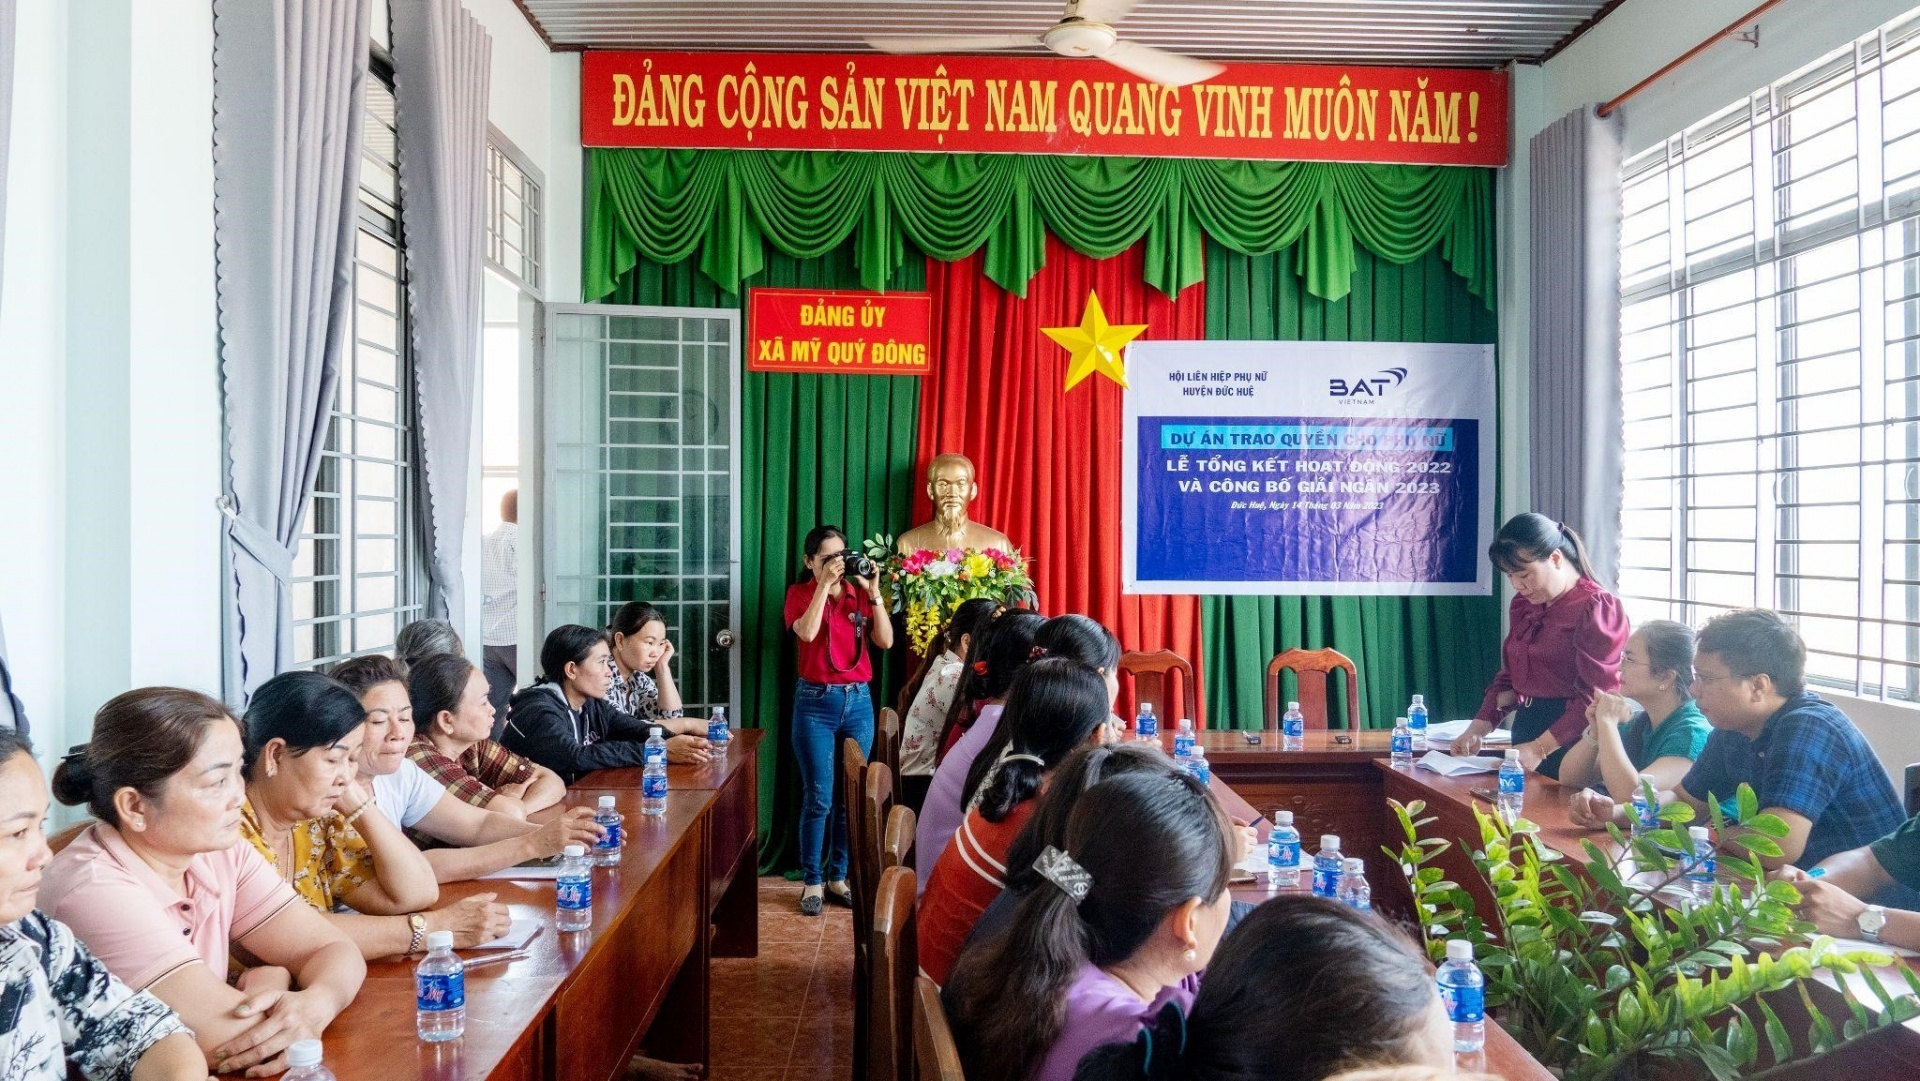 BAT Vietnam creates shared values for the community